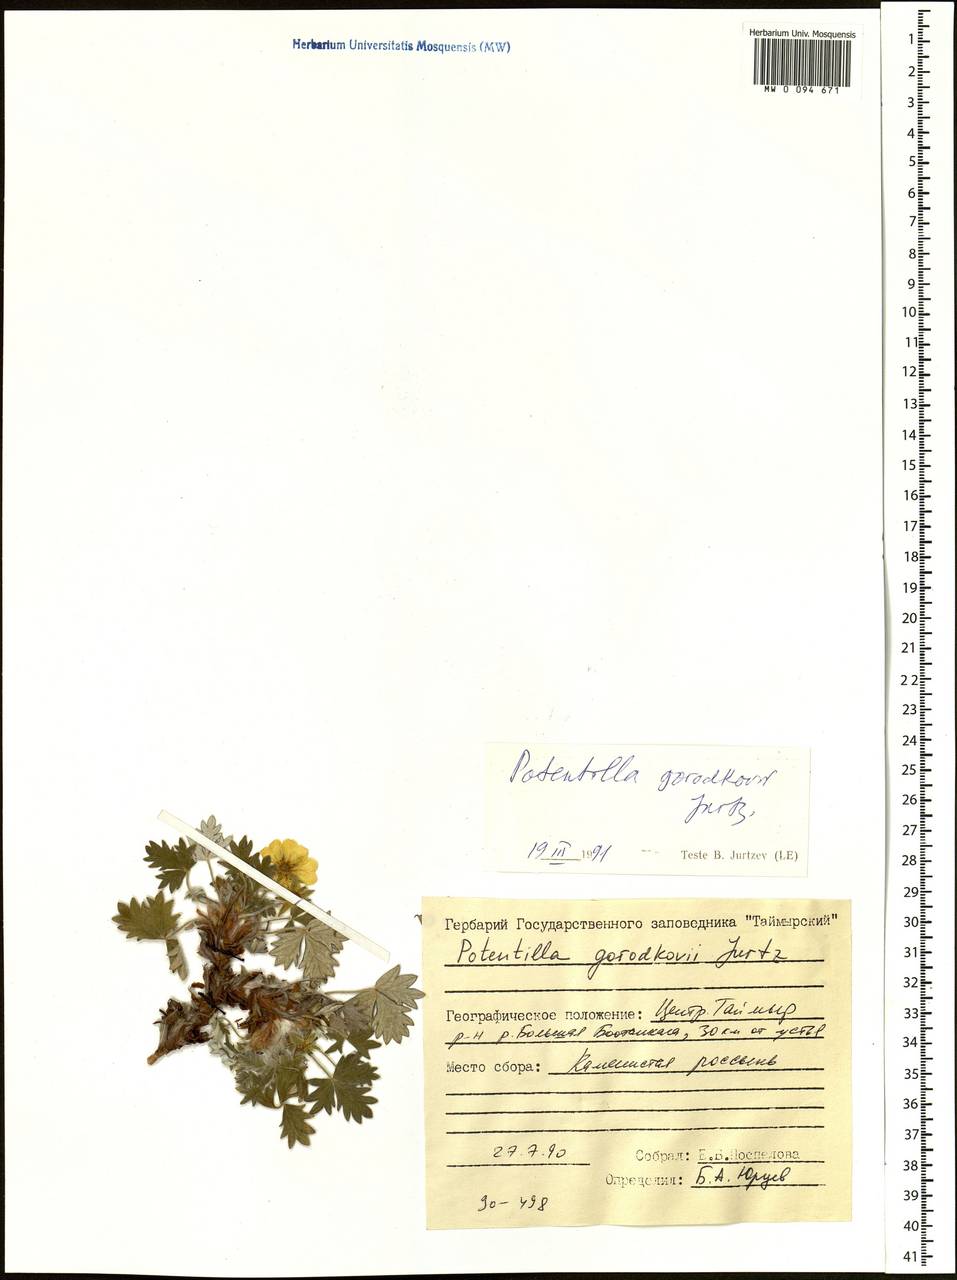 Potentilla ×gorodkovii Jurtzev, Siberia, Central Siberia (S3) (Russia)